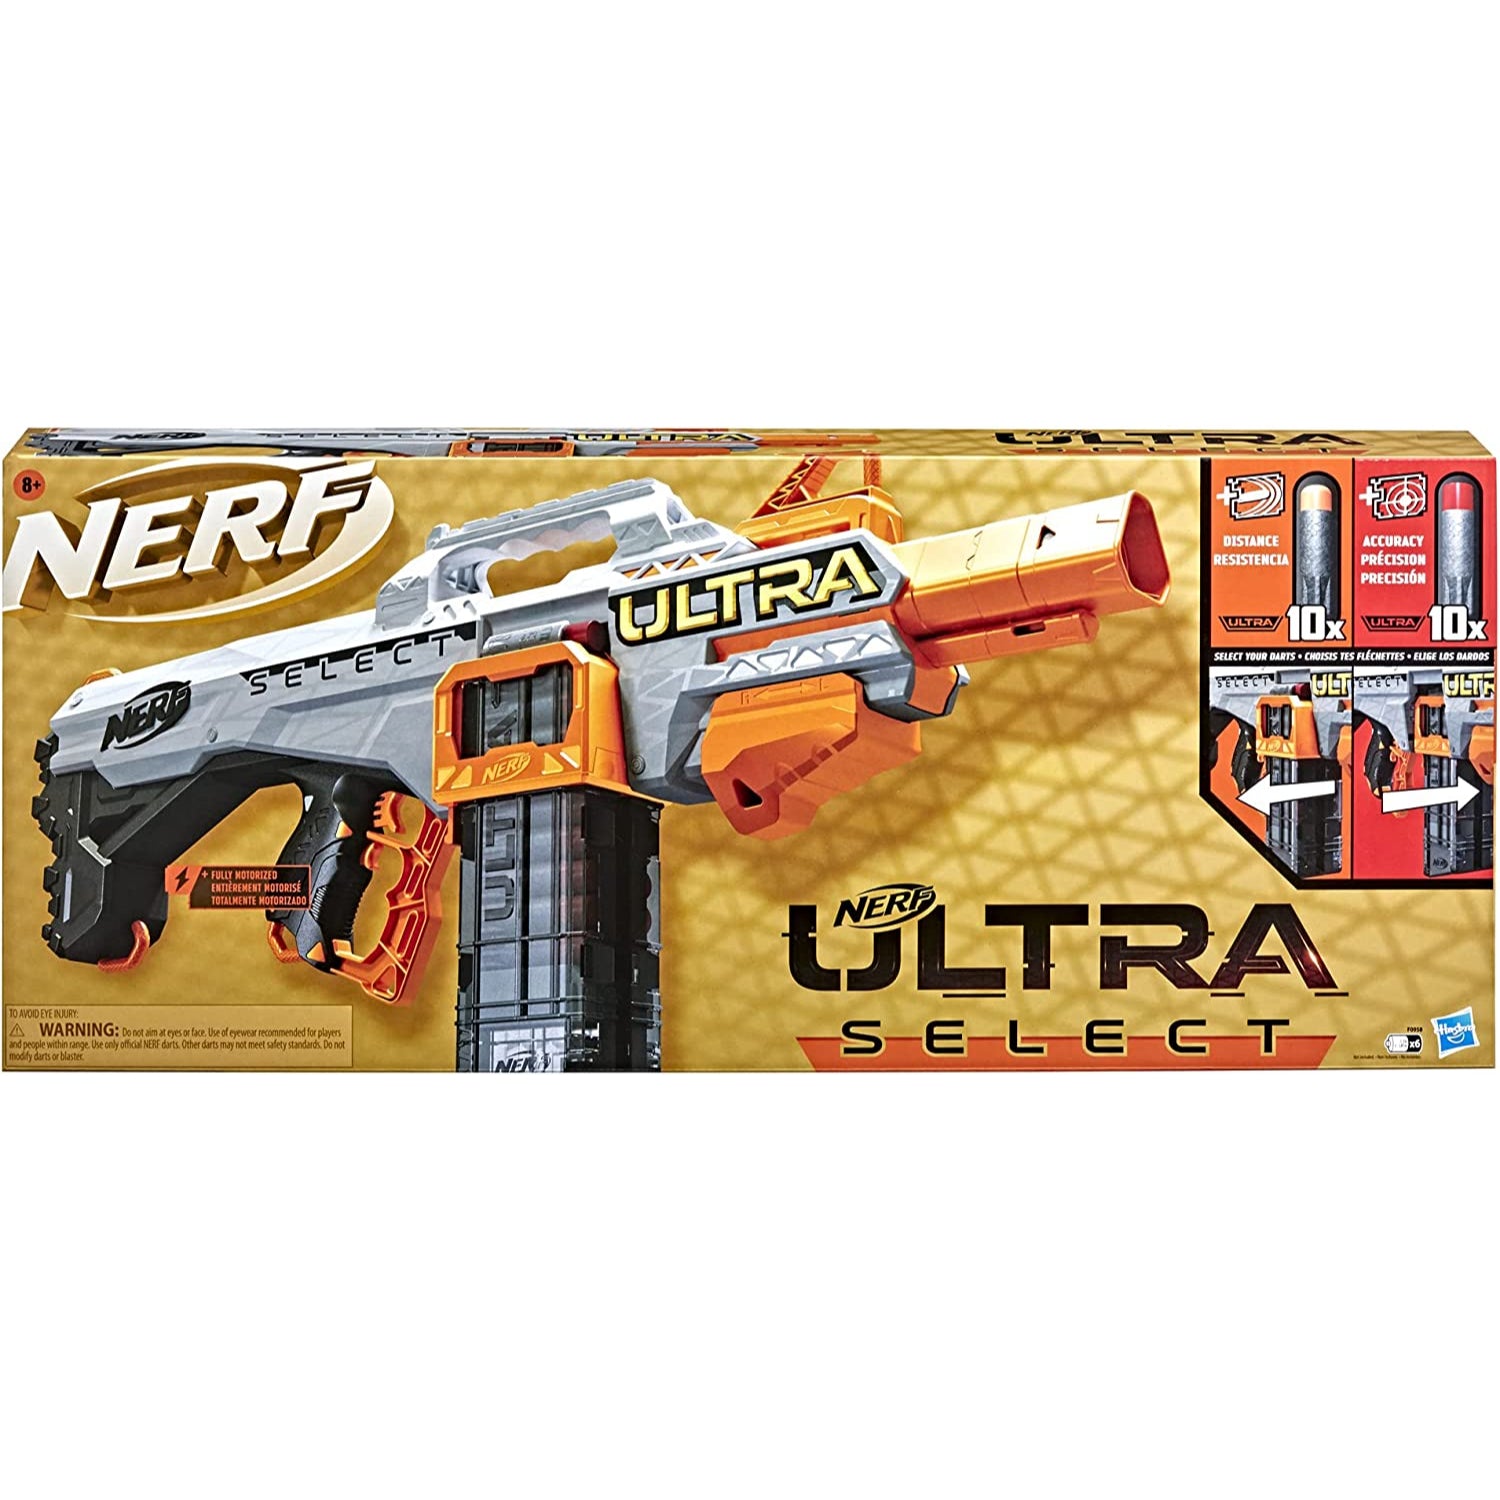 Nerf Ultra Speed Blaster Is the Fastest-Firing Dart Shooter Ever